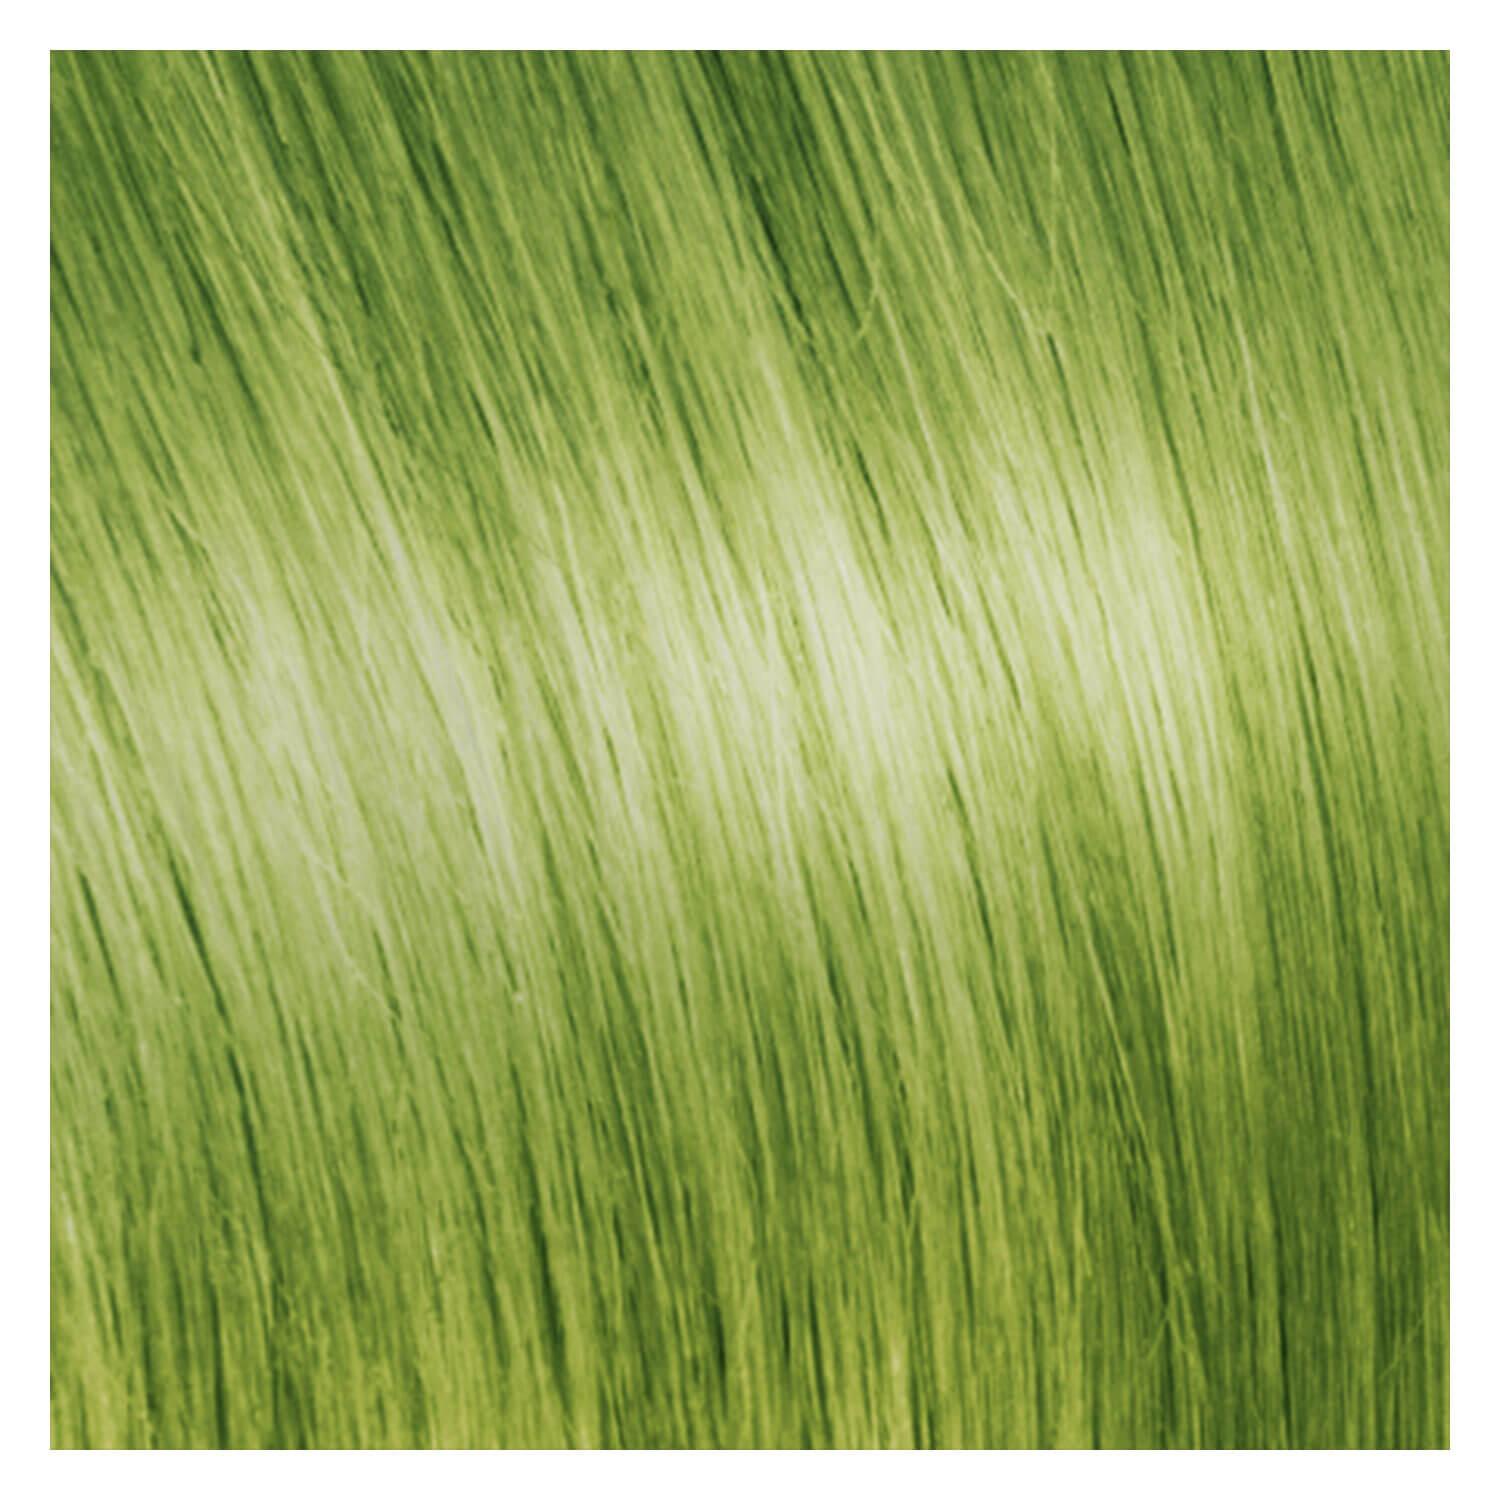 SHE Bonding-System Hair Extensions Fantasy Straight - Neongrün 55/60cm